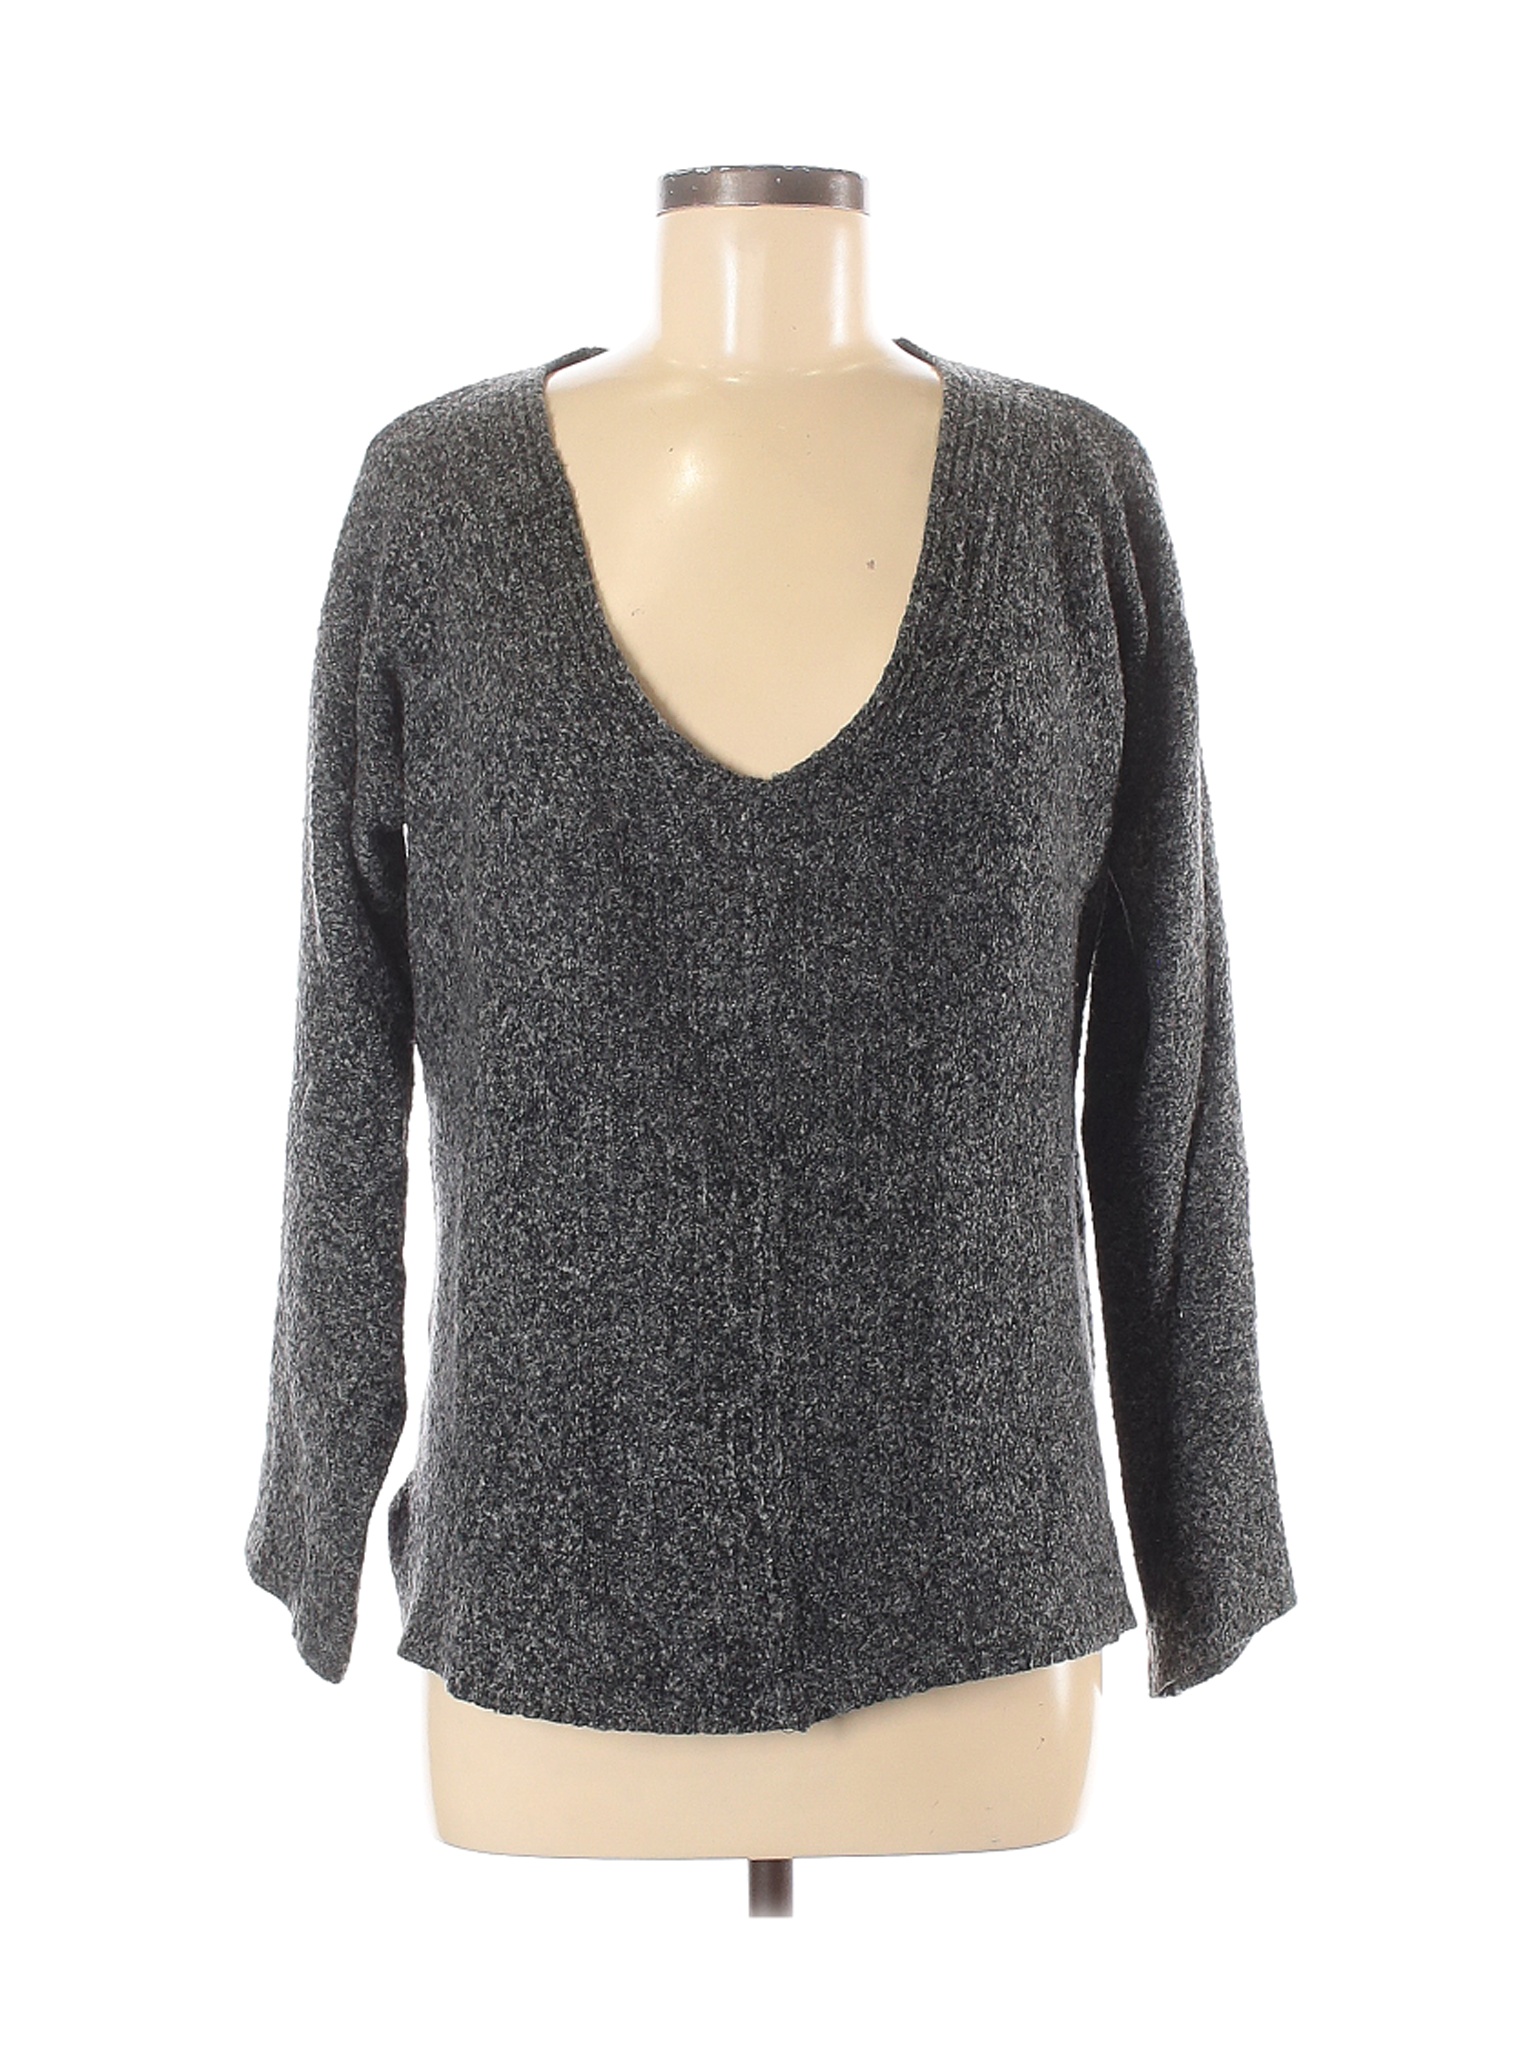 Old Navy Women Gray Pullover Sweater M | eBay